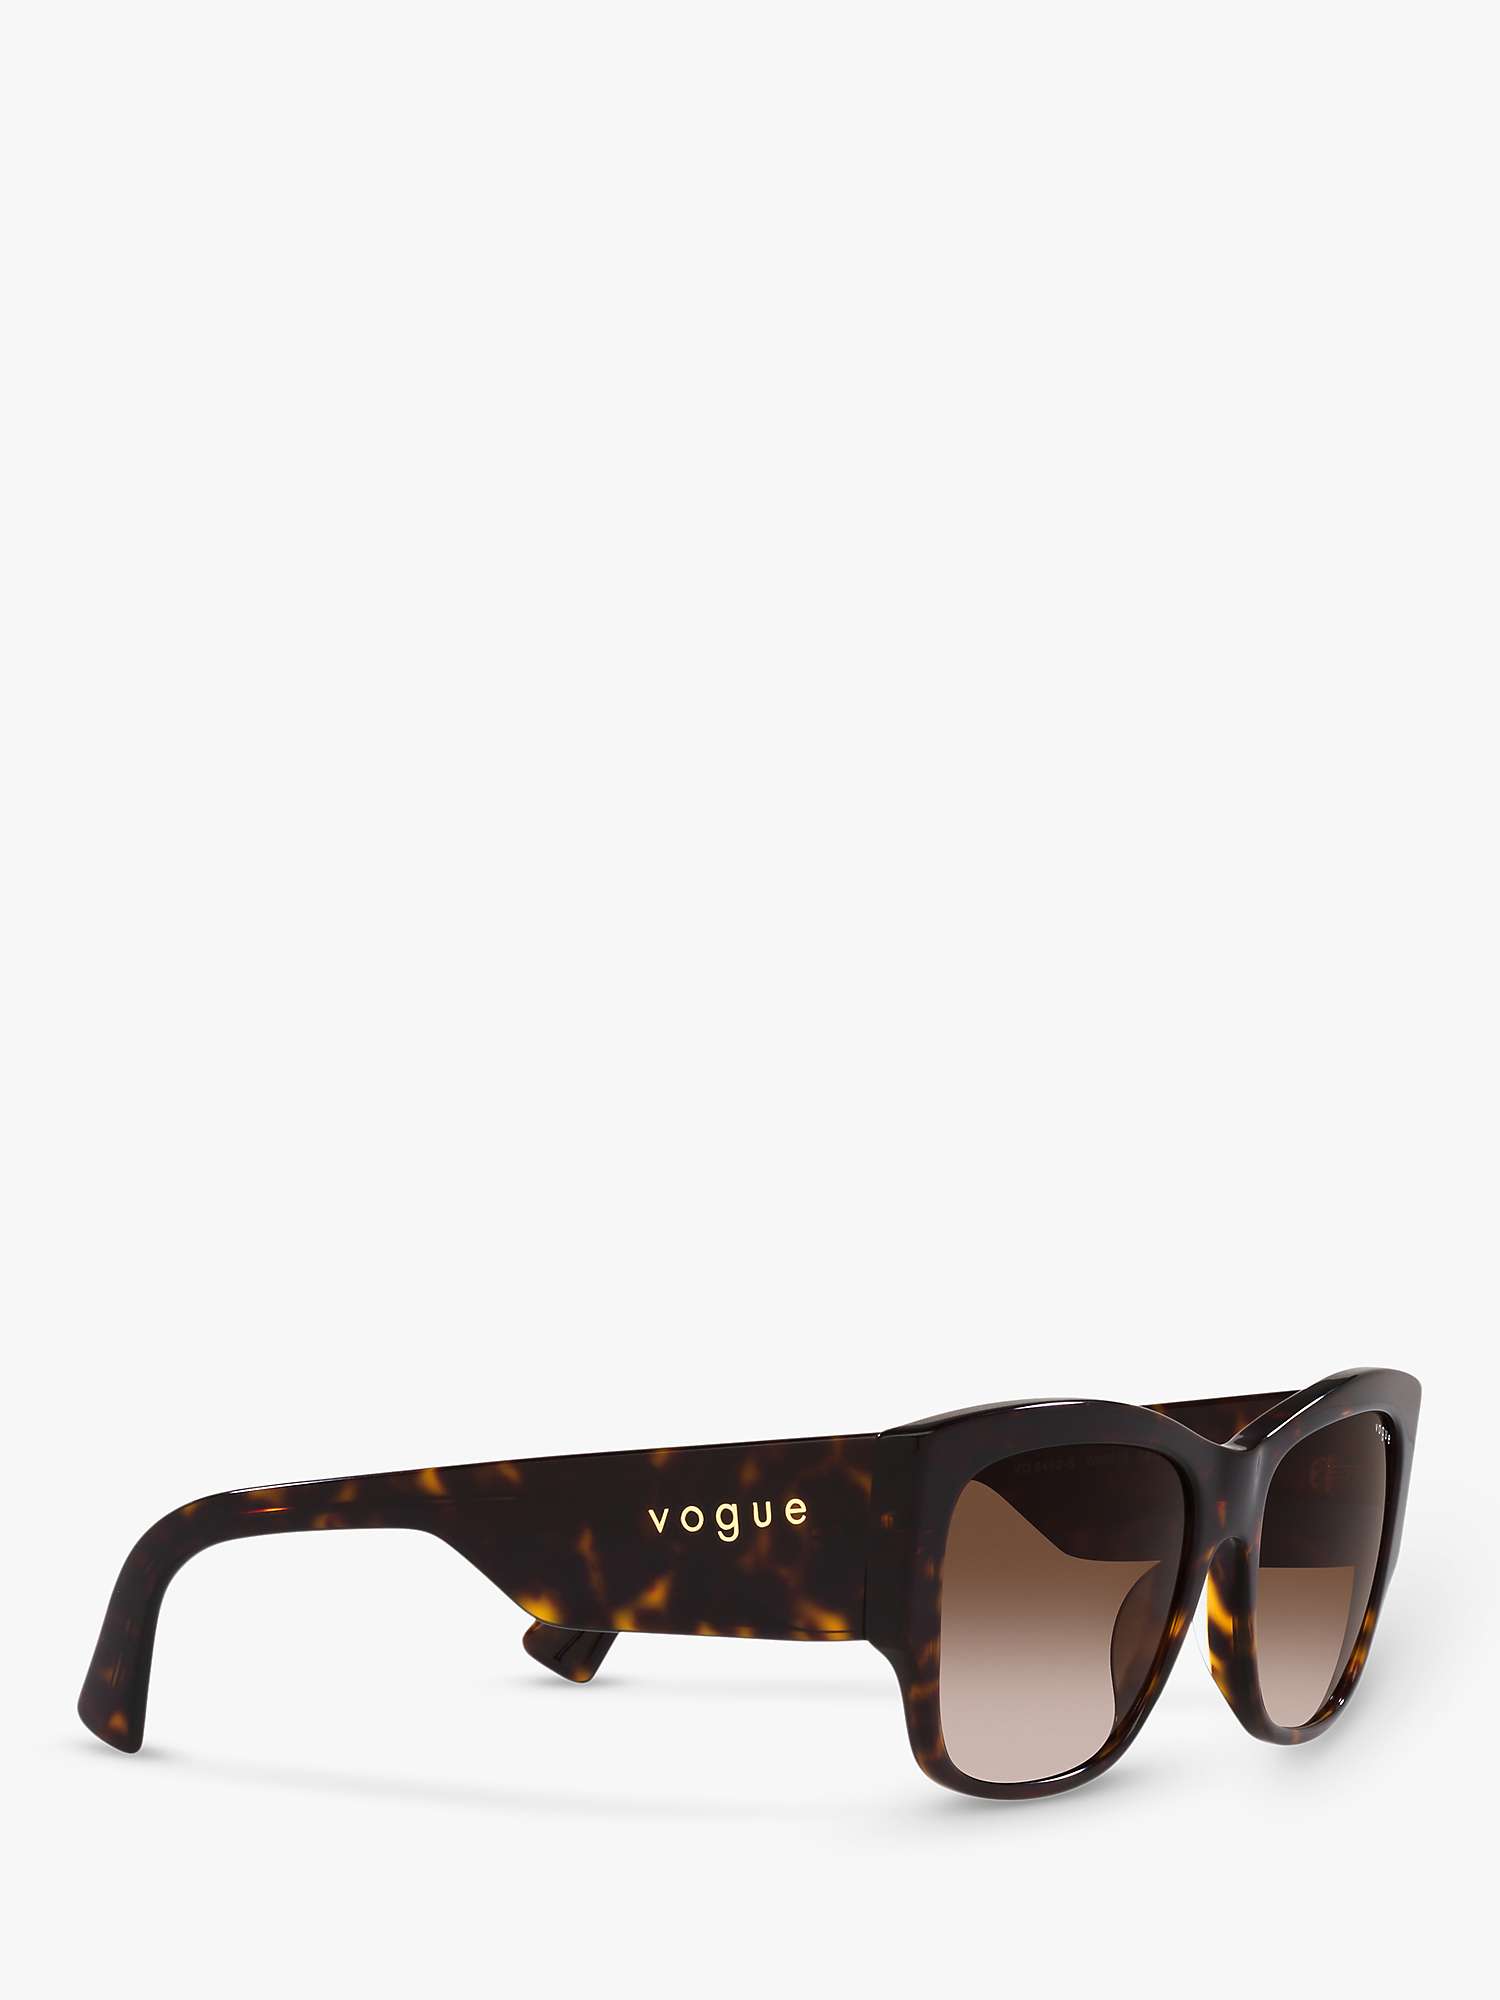 Buy Vogue VO5462S Women's Square Sunglasses, Dark Havana/Brown Gradient Online at johnlewis.com